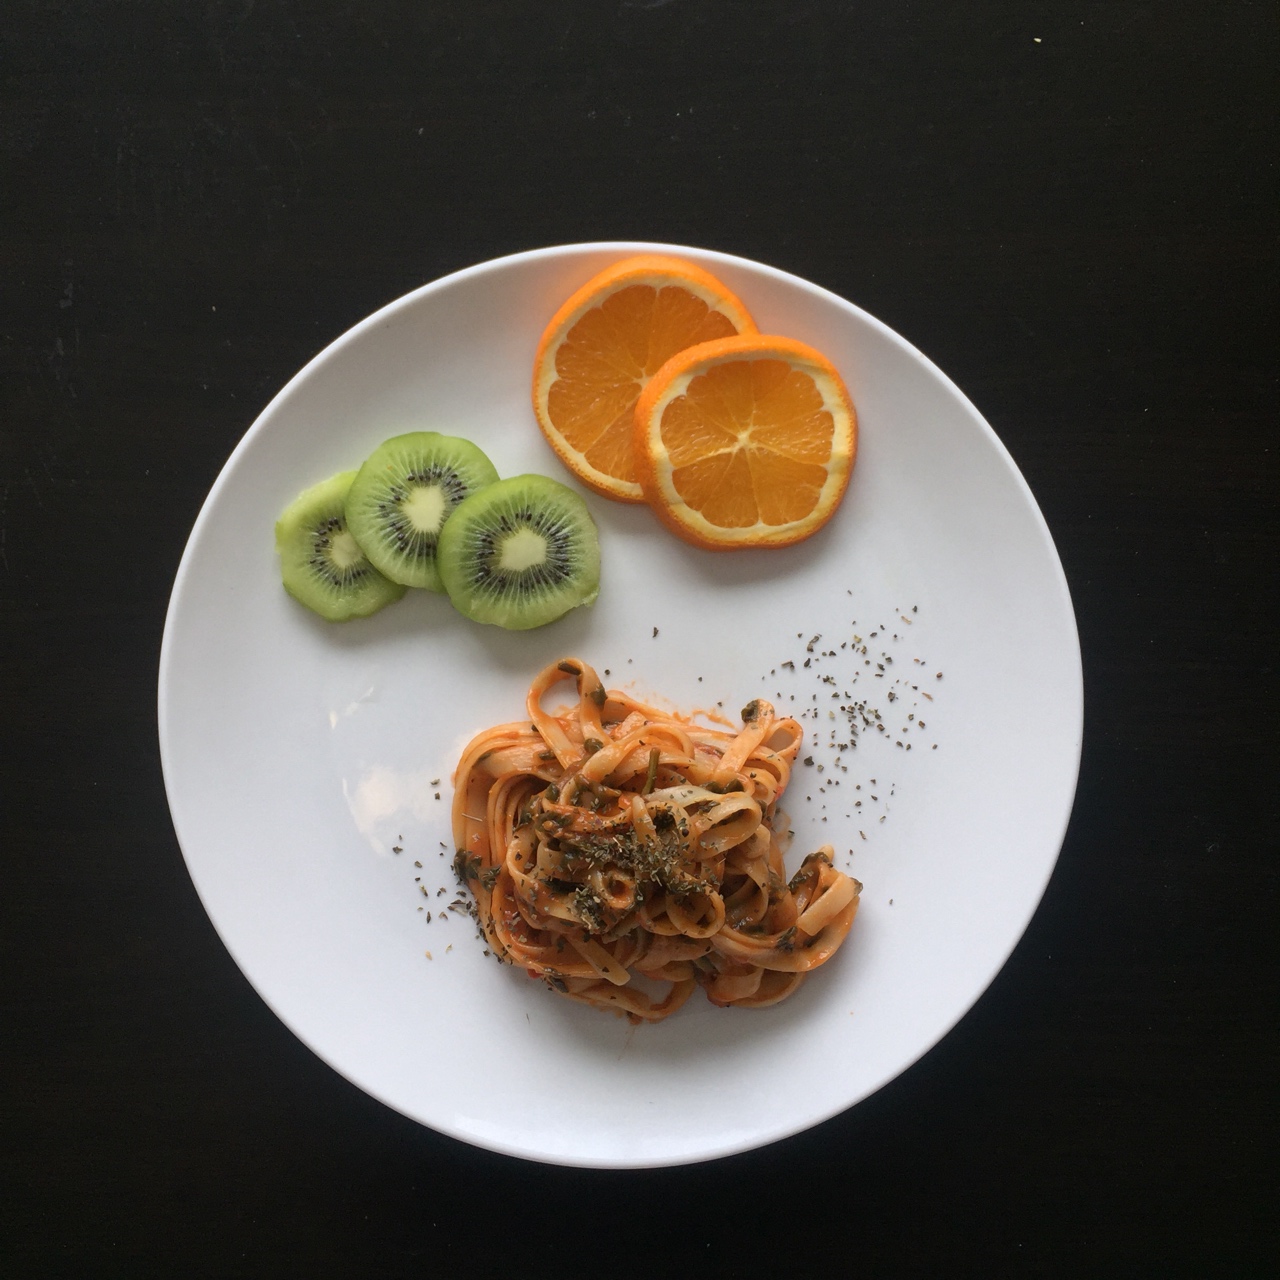 菠菜青酱意面(Spaghetti with Spinach and Basil Pesto)